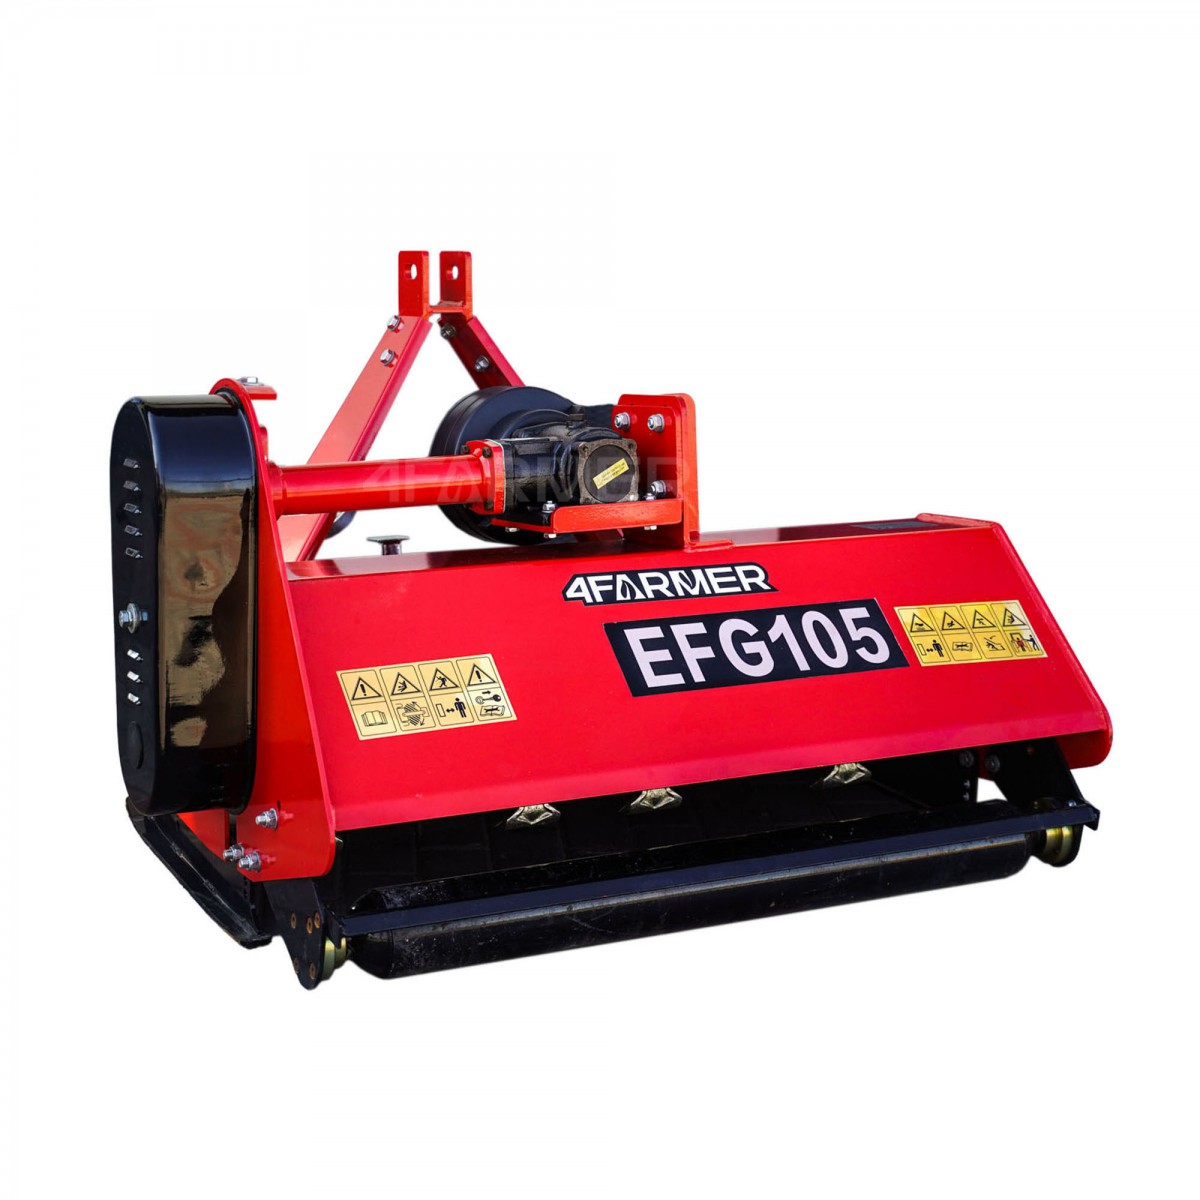 EFG 105 4FARMER flail mower - red